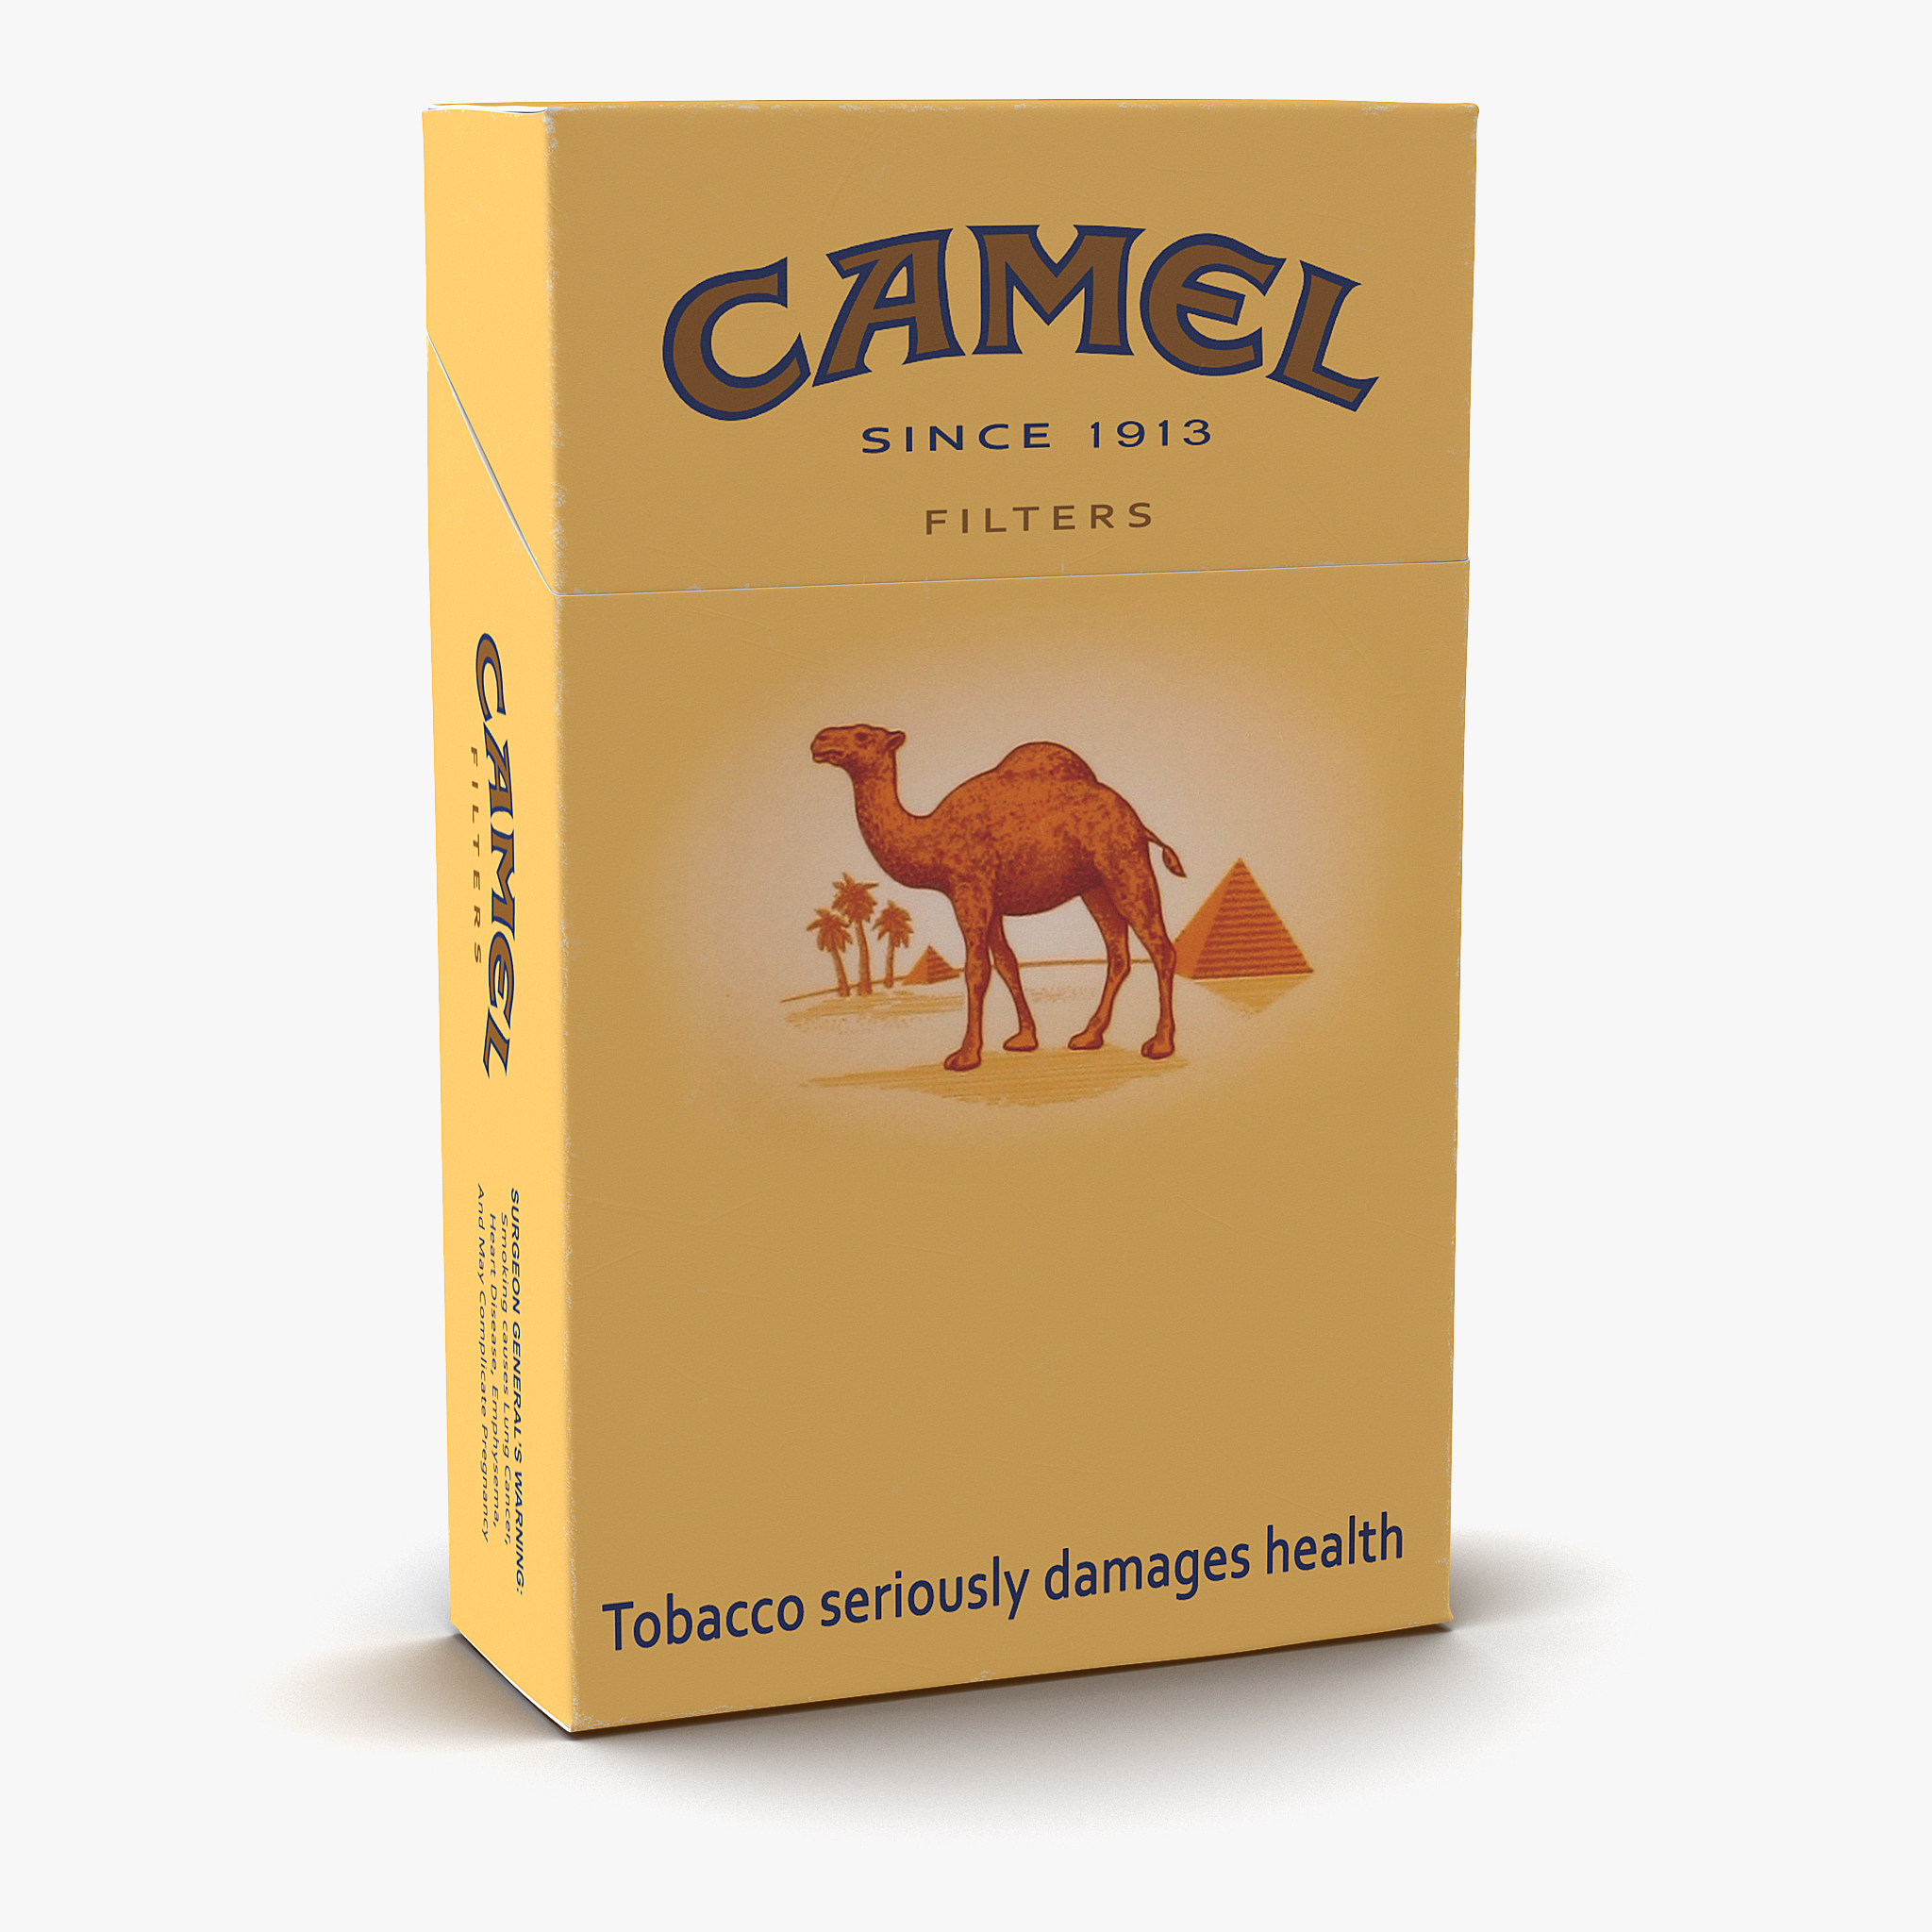 Camel какие вкусы. Пачка сигарет кэмел желтый. Кэмел сигареты с желтым верблюдом. Кэмел сигареты сигареты кэмел. Camel сигареты верблюд.